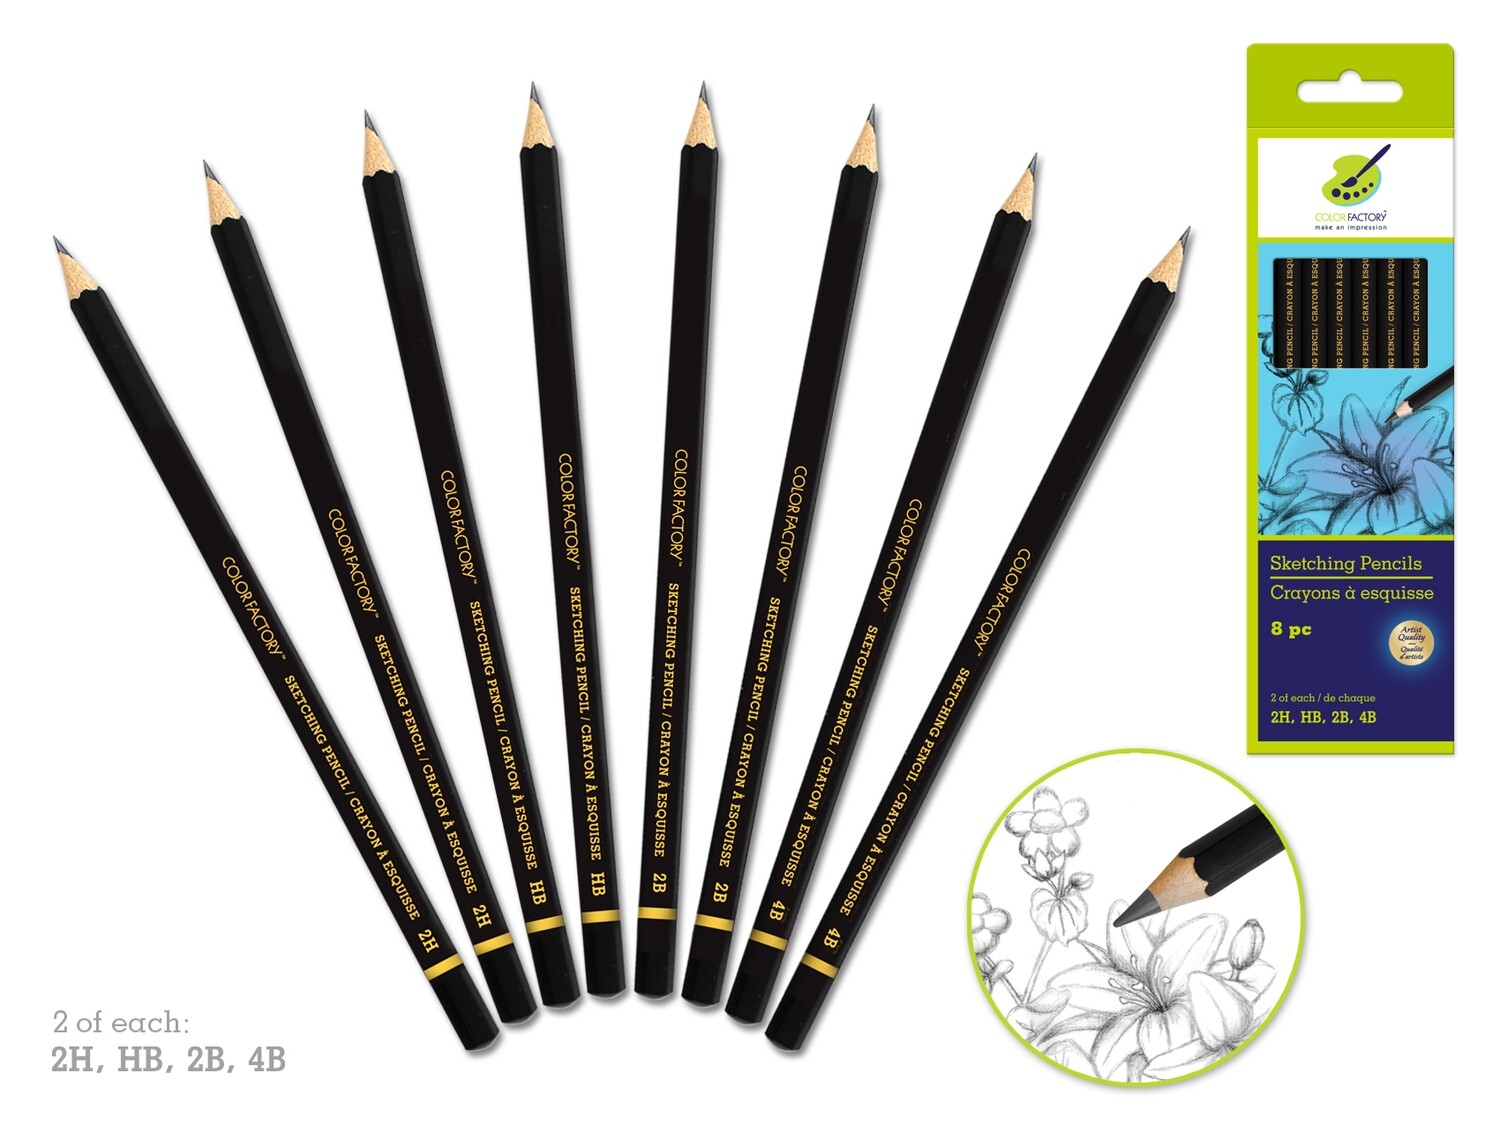 Color Factory Sketching Pencils. 8 PC PA488